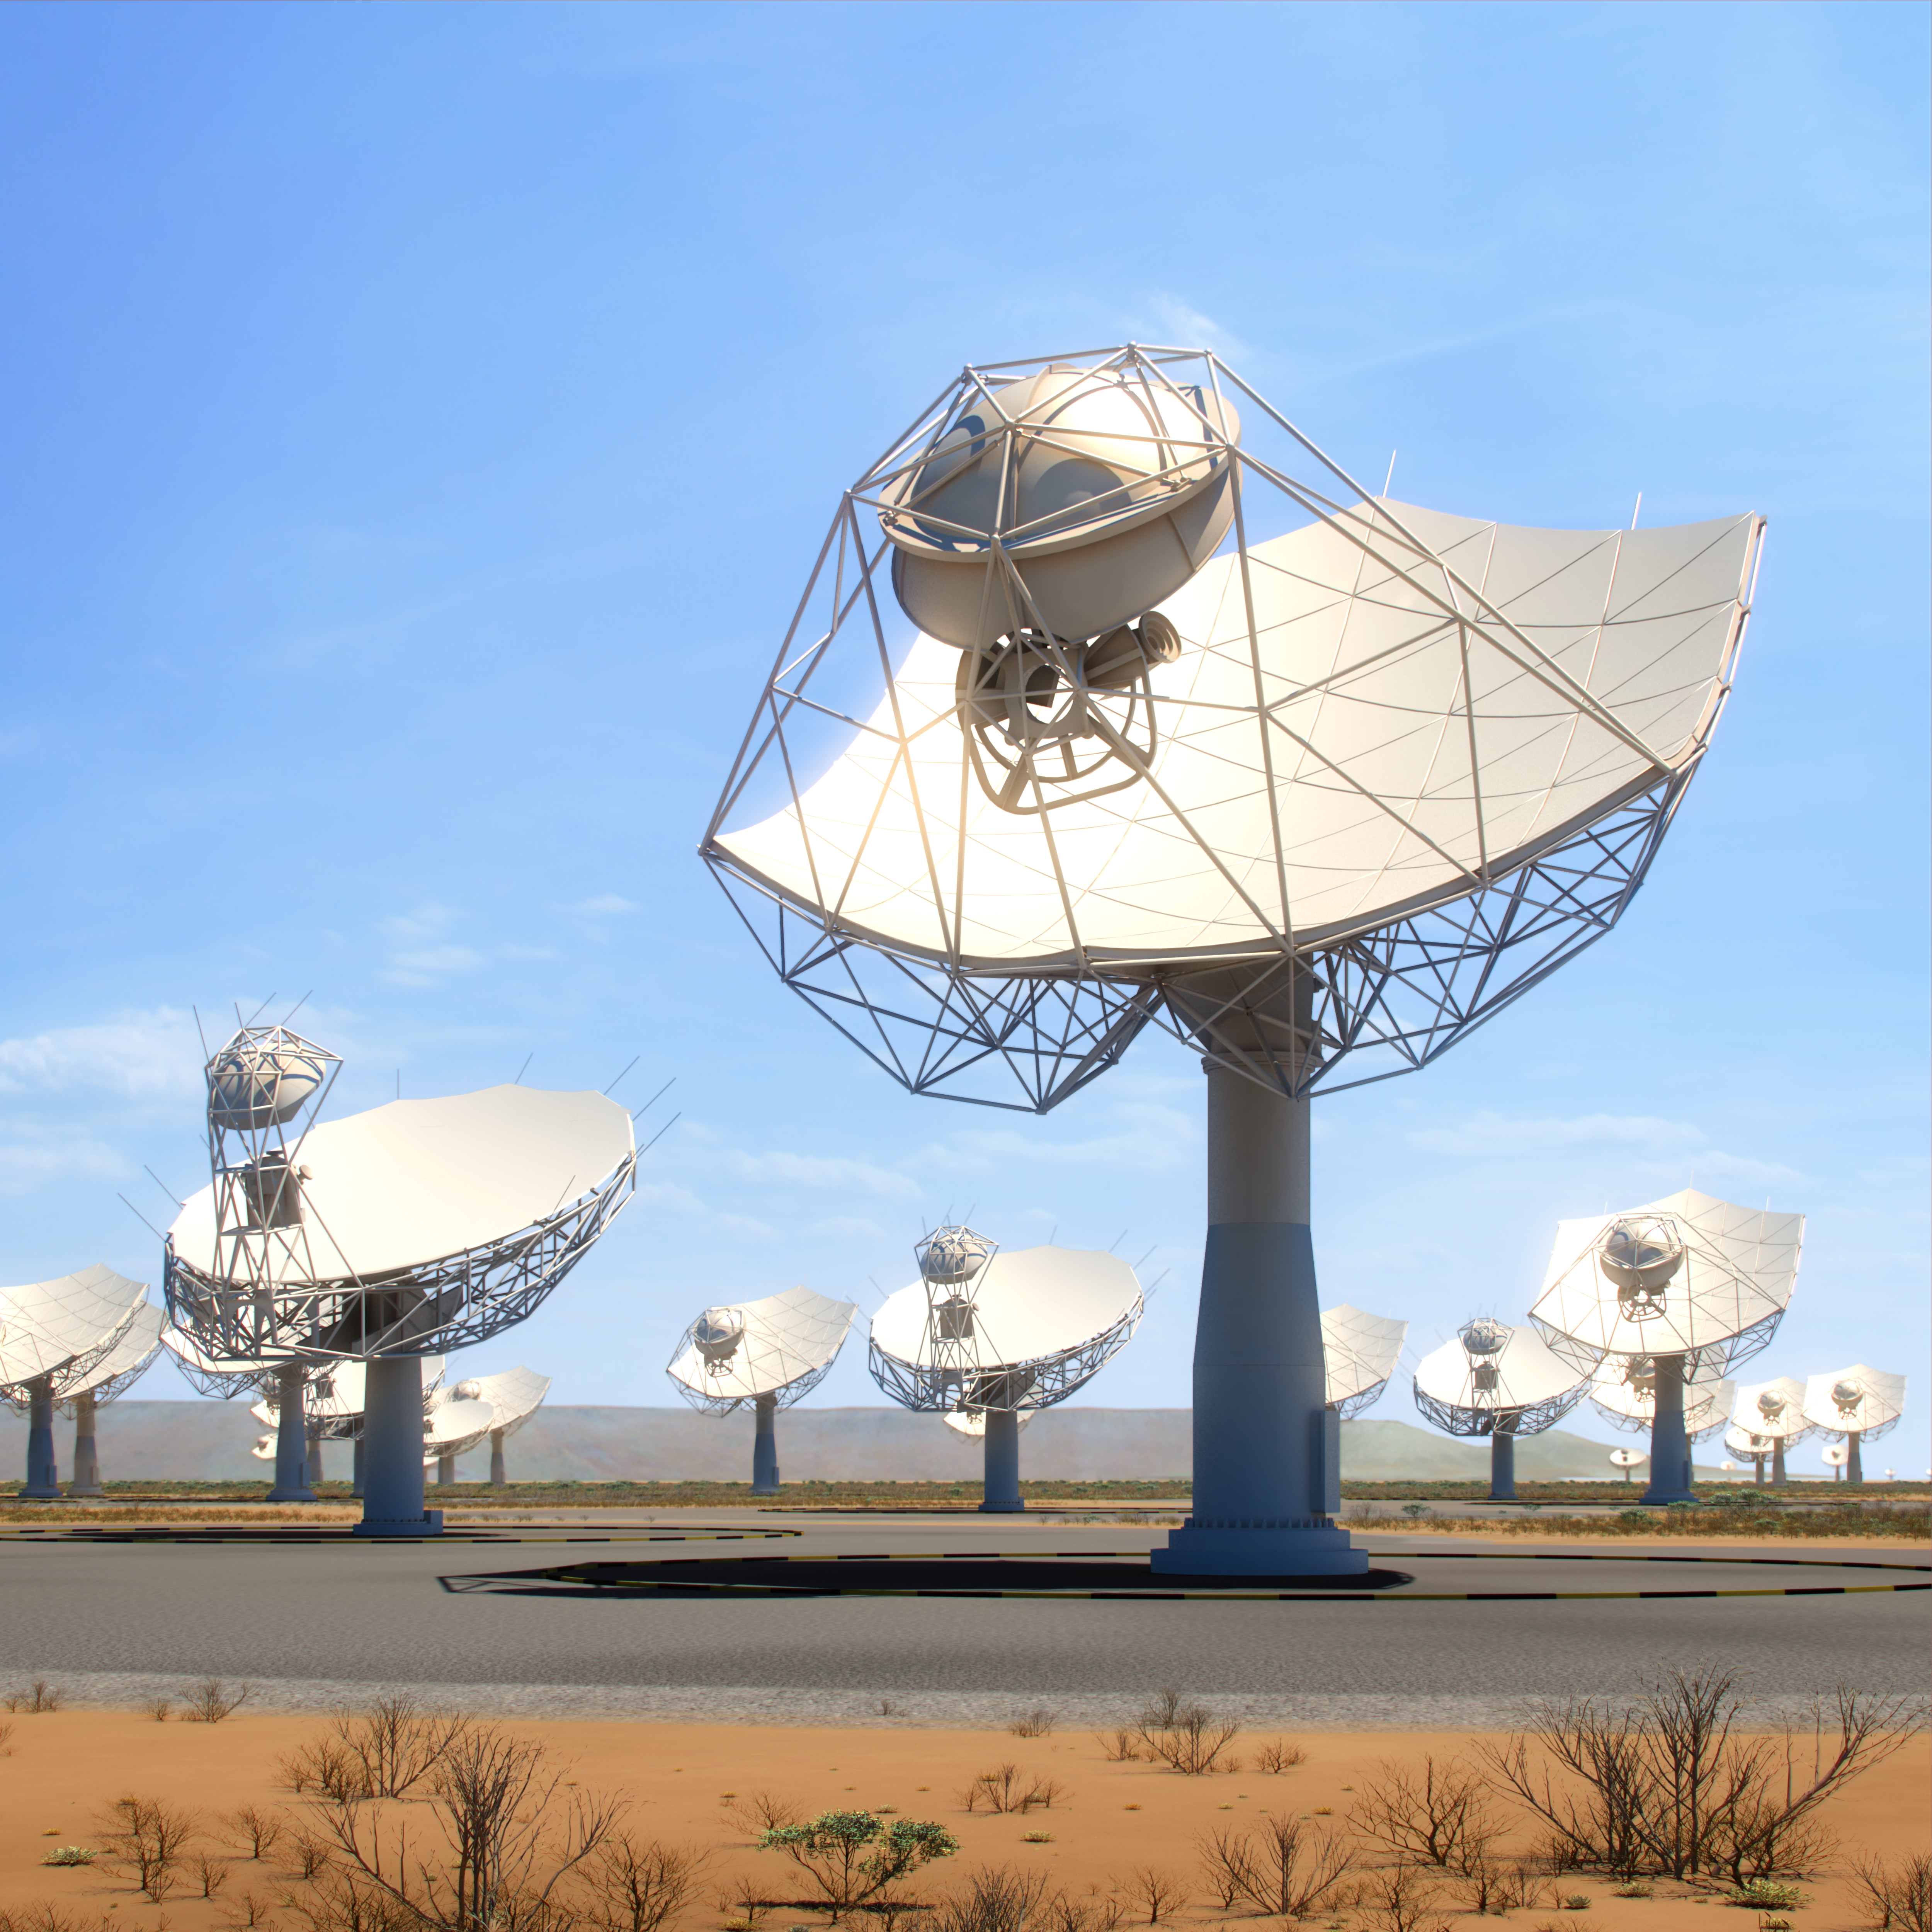 SKA radio telescope arrays, South Africa